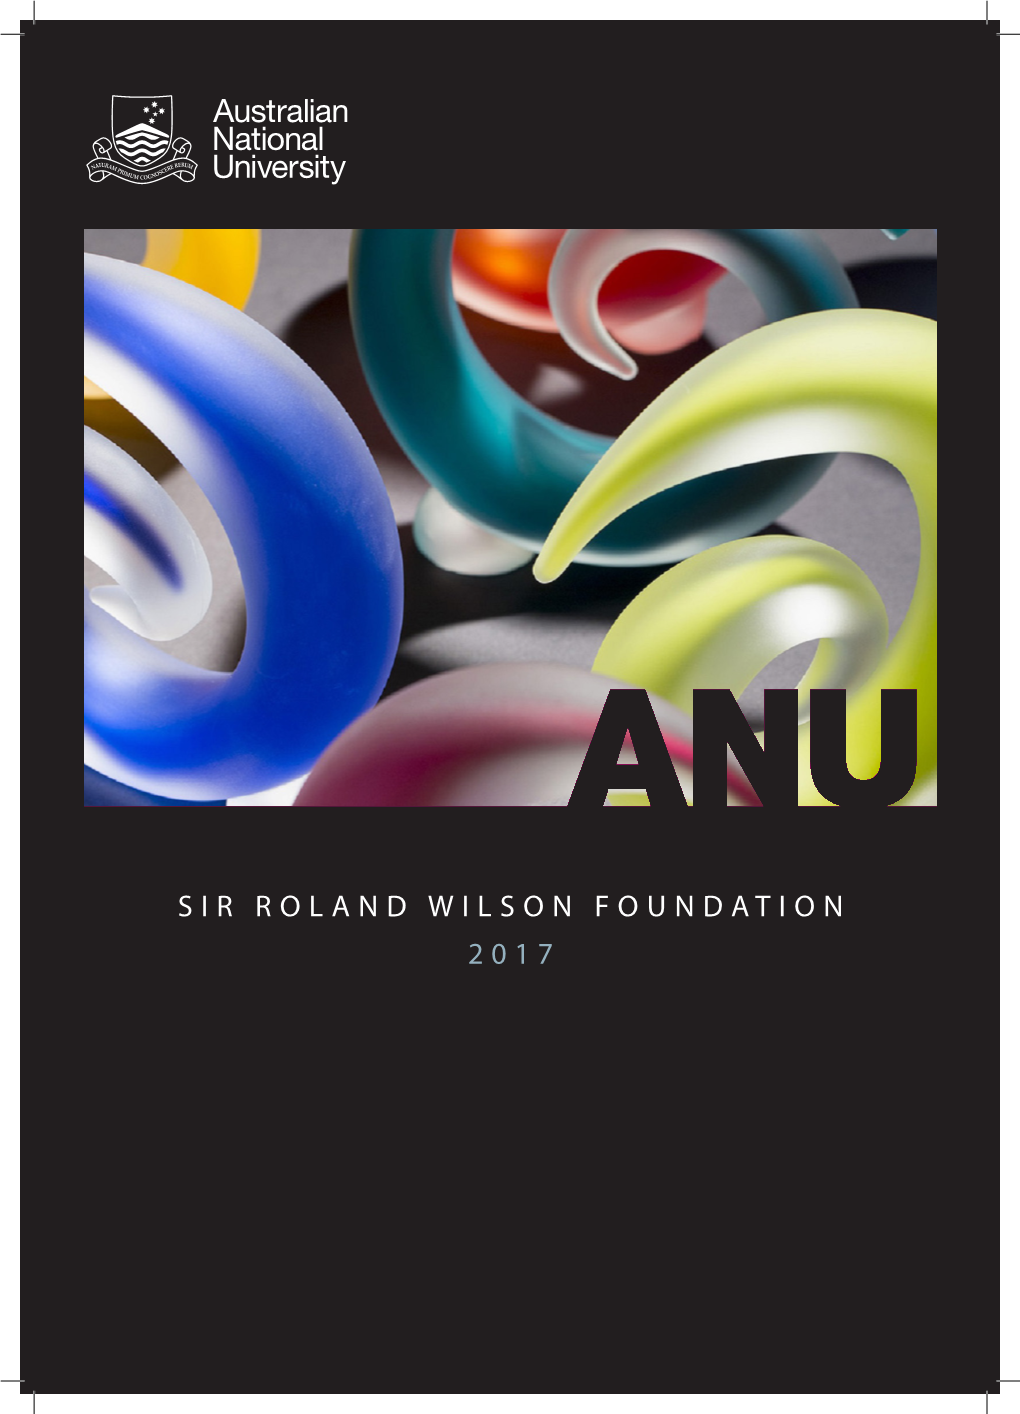 Sir Roland Wilson Foundation 2017